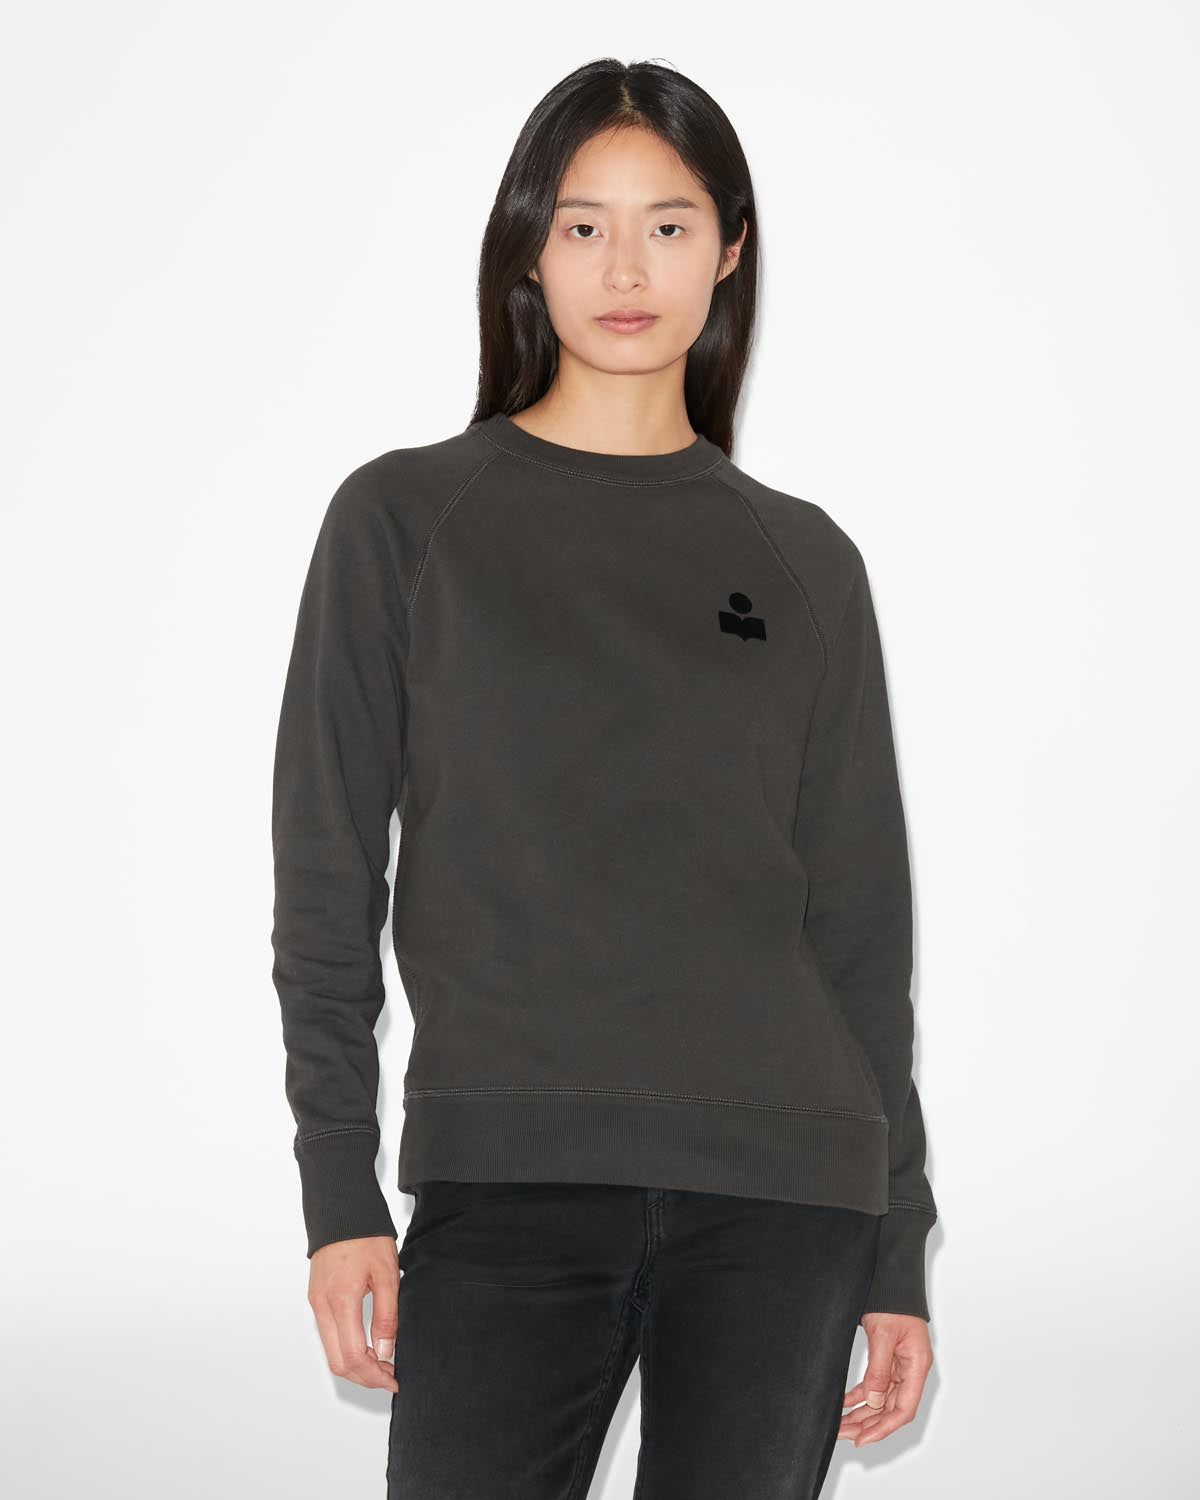 Milla sweatshirt Woman Black 5